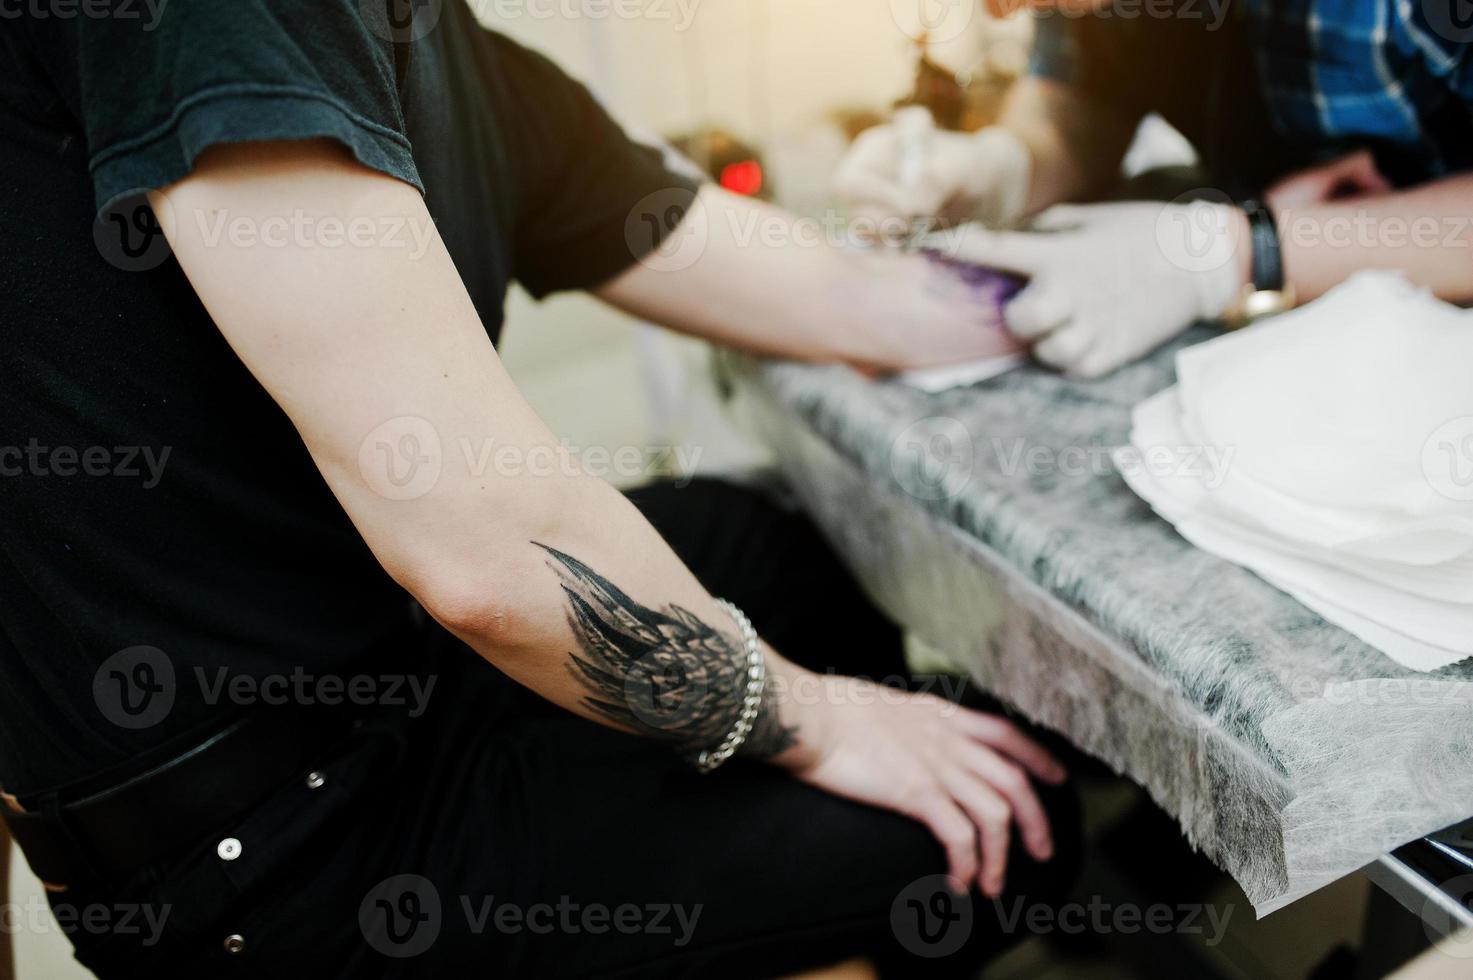 el maestro del tatuaje hace un tatuaje para un hombre rockero en el salón de tatuajes foto